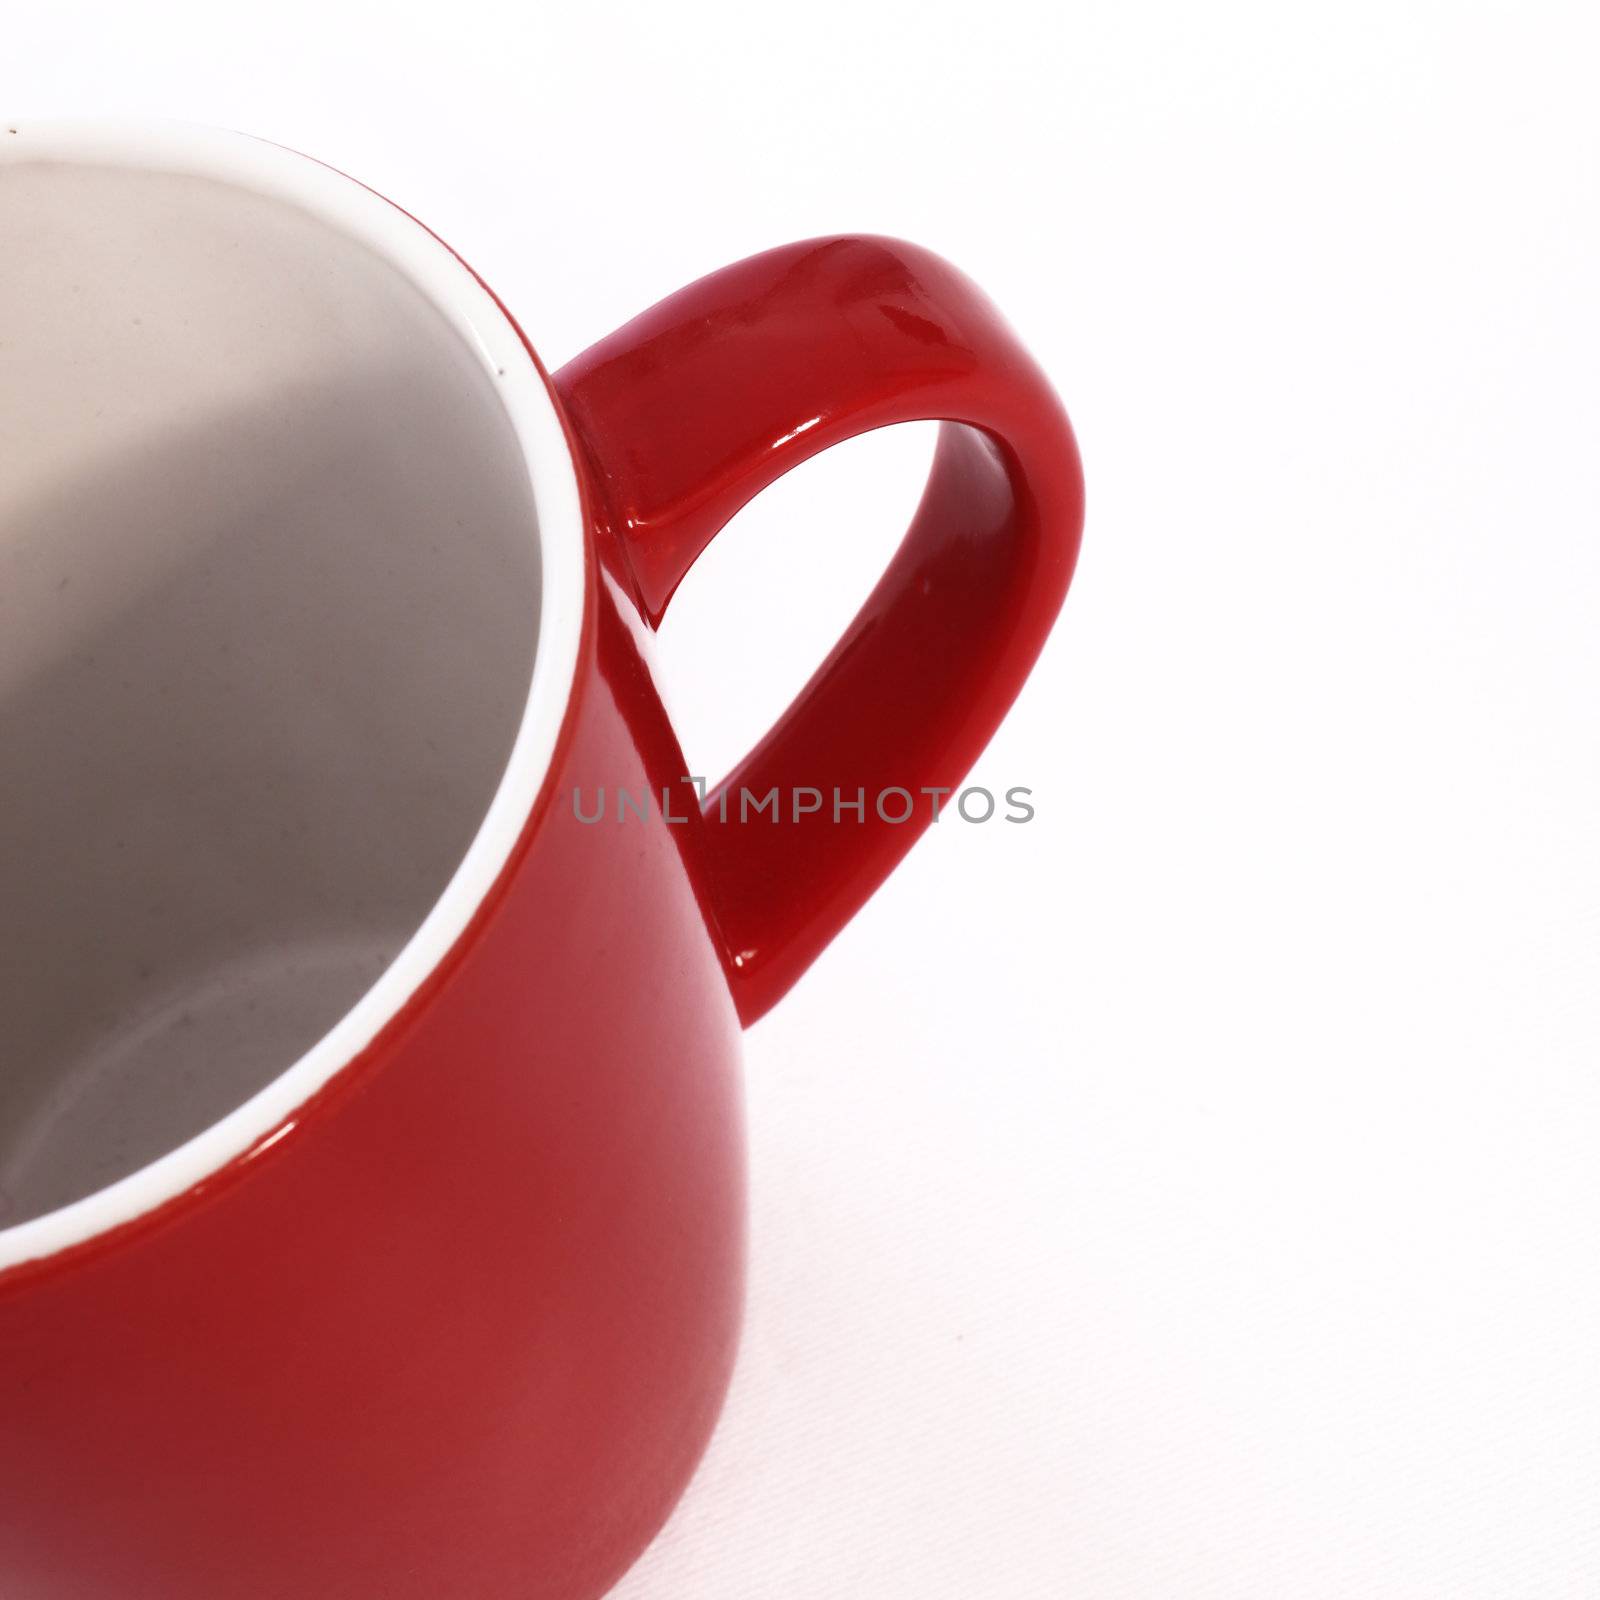 Looking inside an empty coffee mug by Farina6000